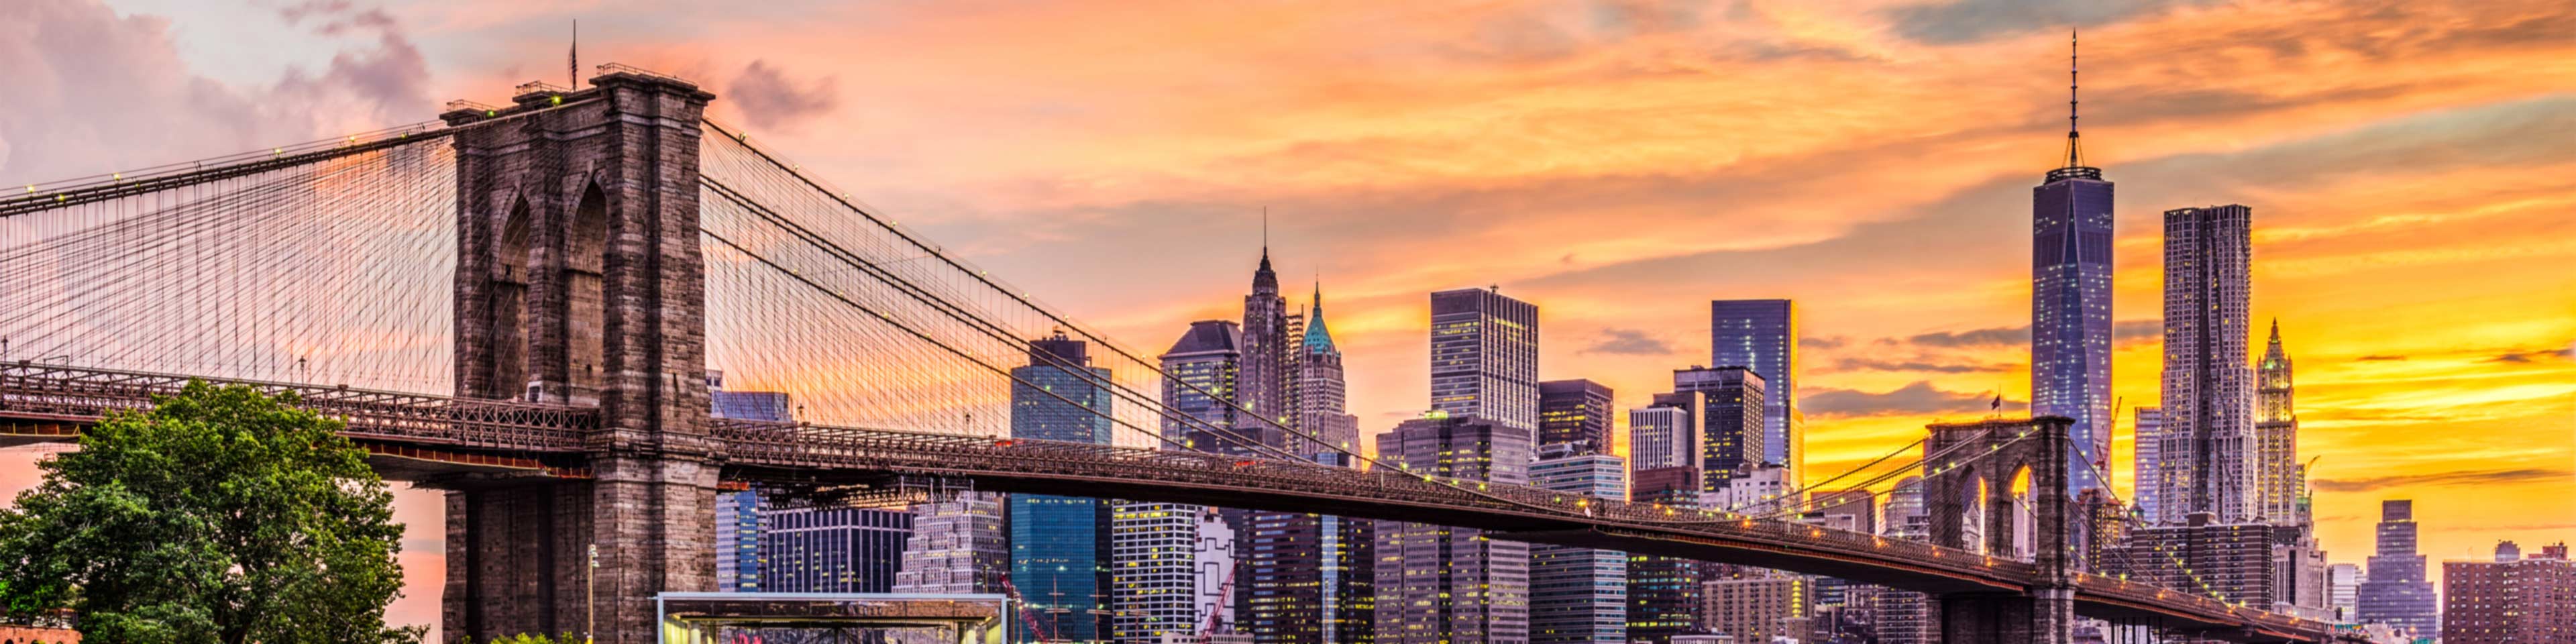 Skyline view of  NYC and the Brooklyn bridge